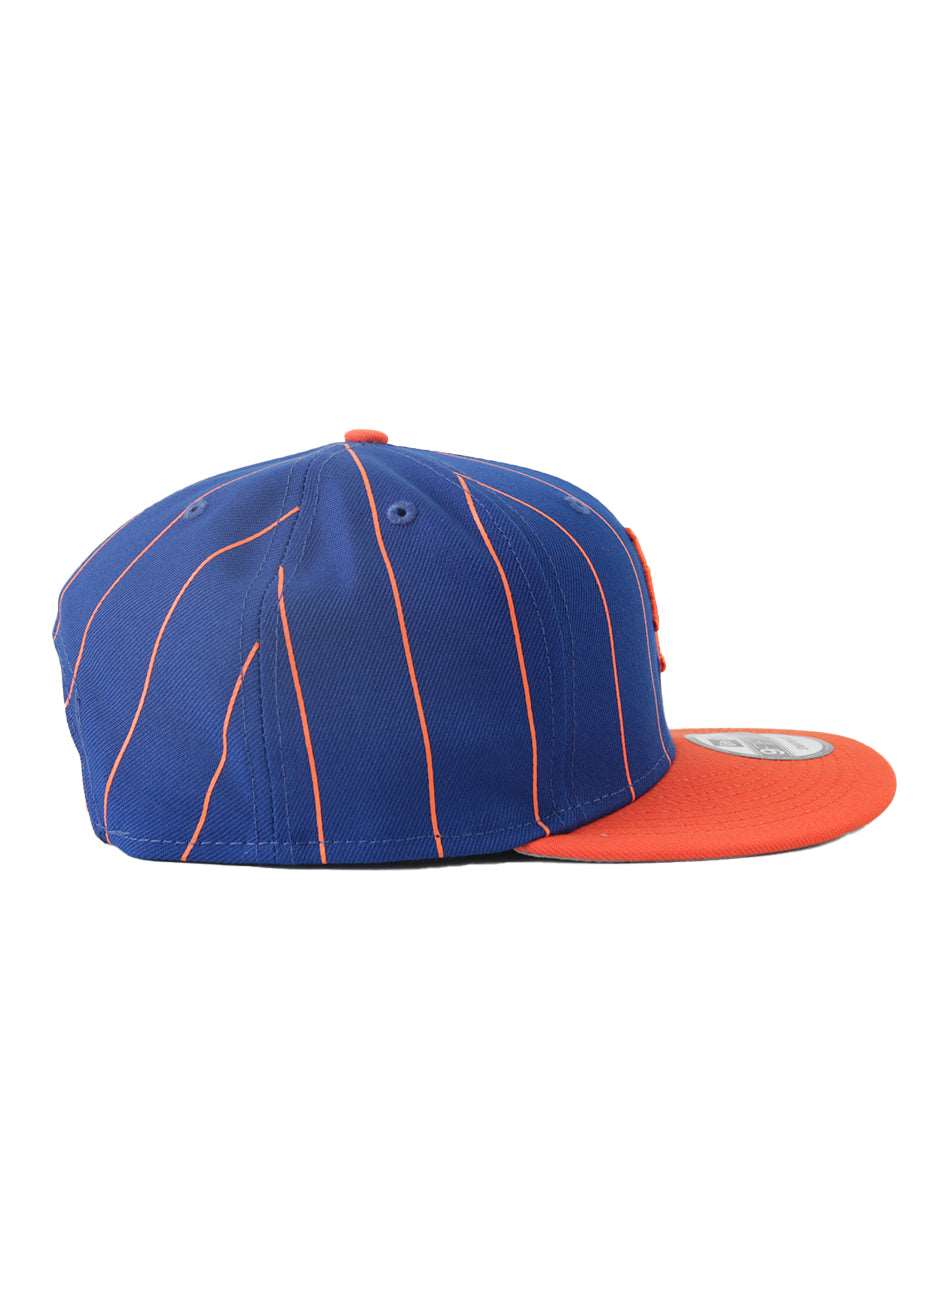 NY Mets Vintage Pinstripe OTC 950 Snap-Back Hat